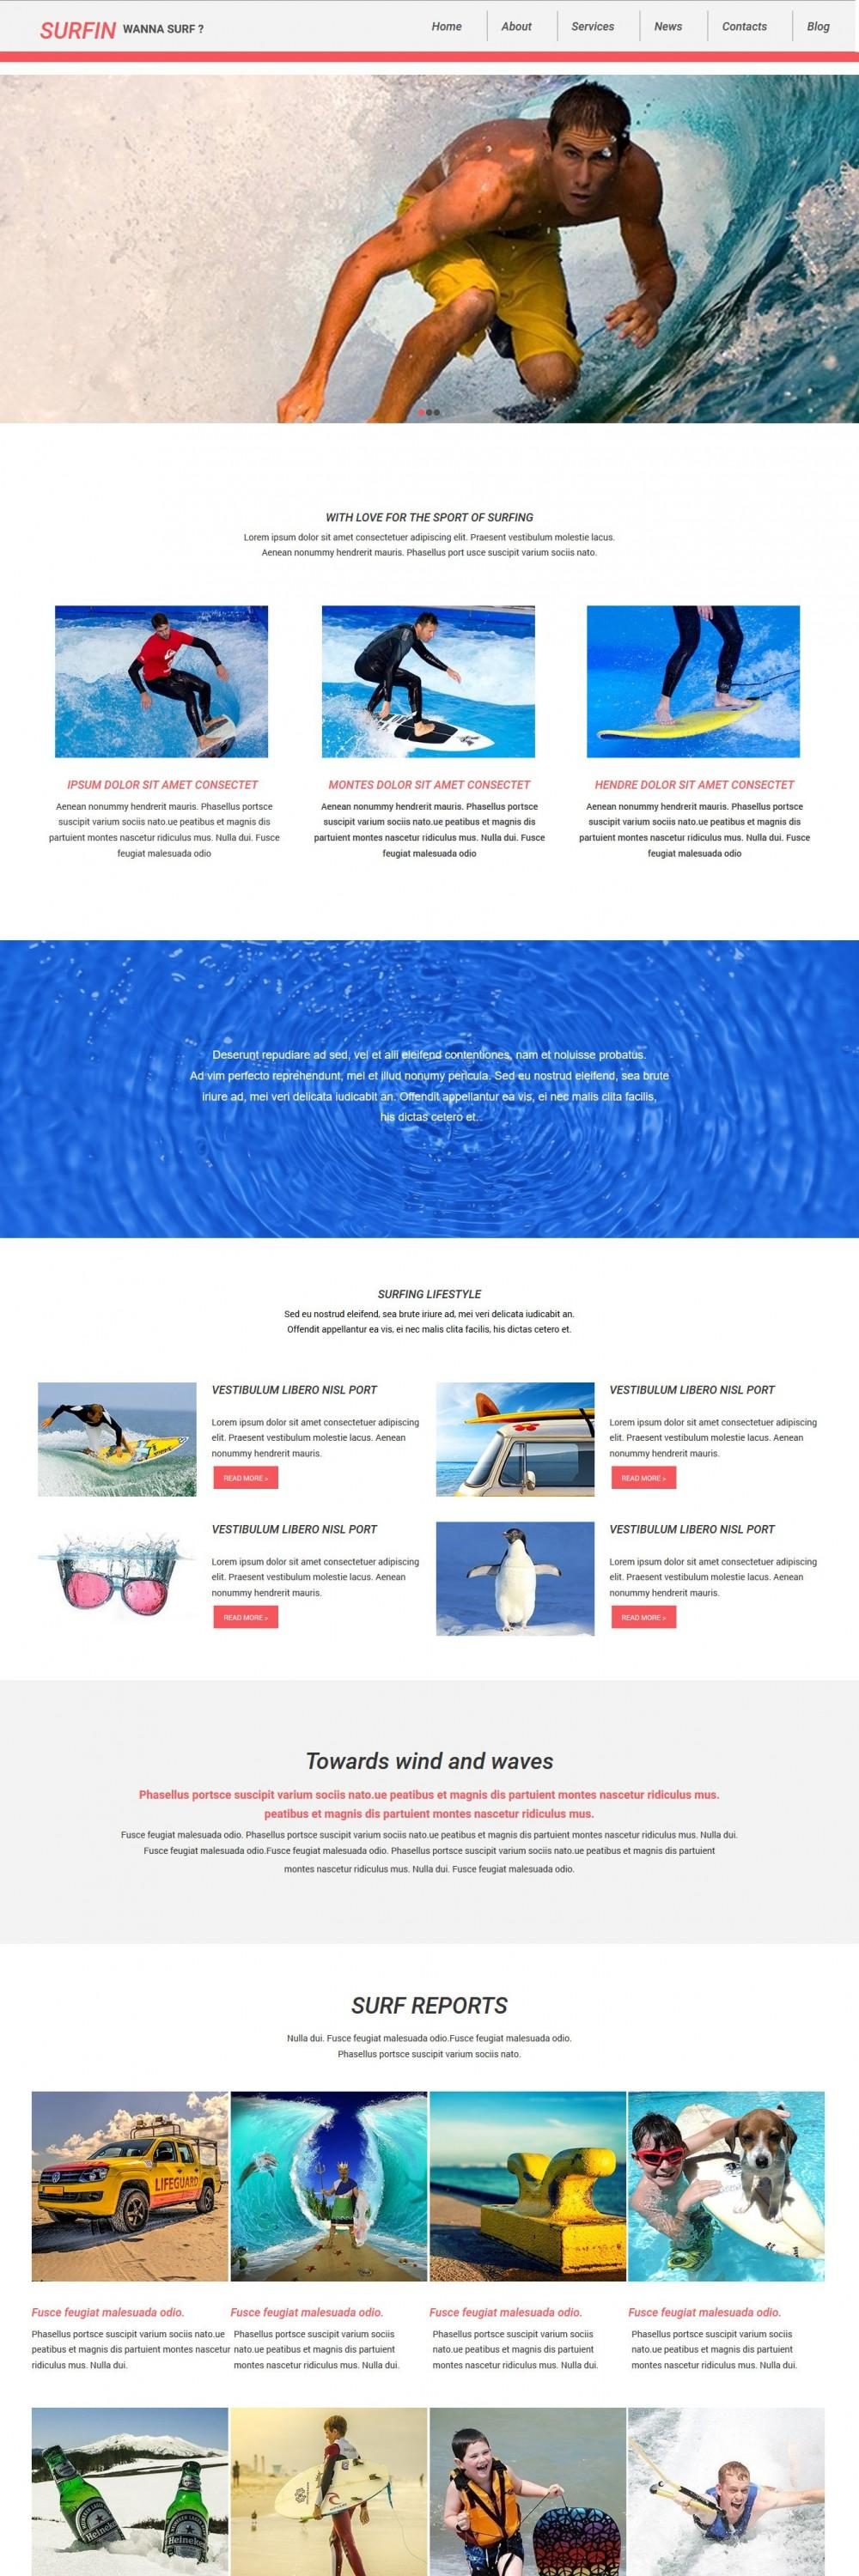 Surfin - Joomla Template for Surfin Club/Sports